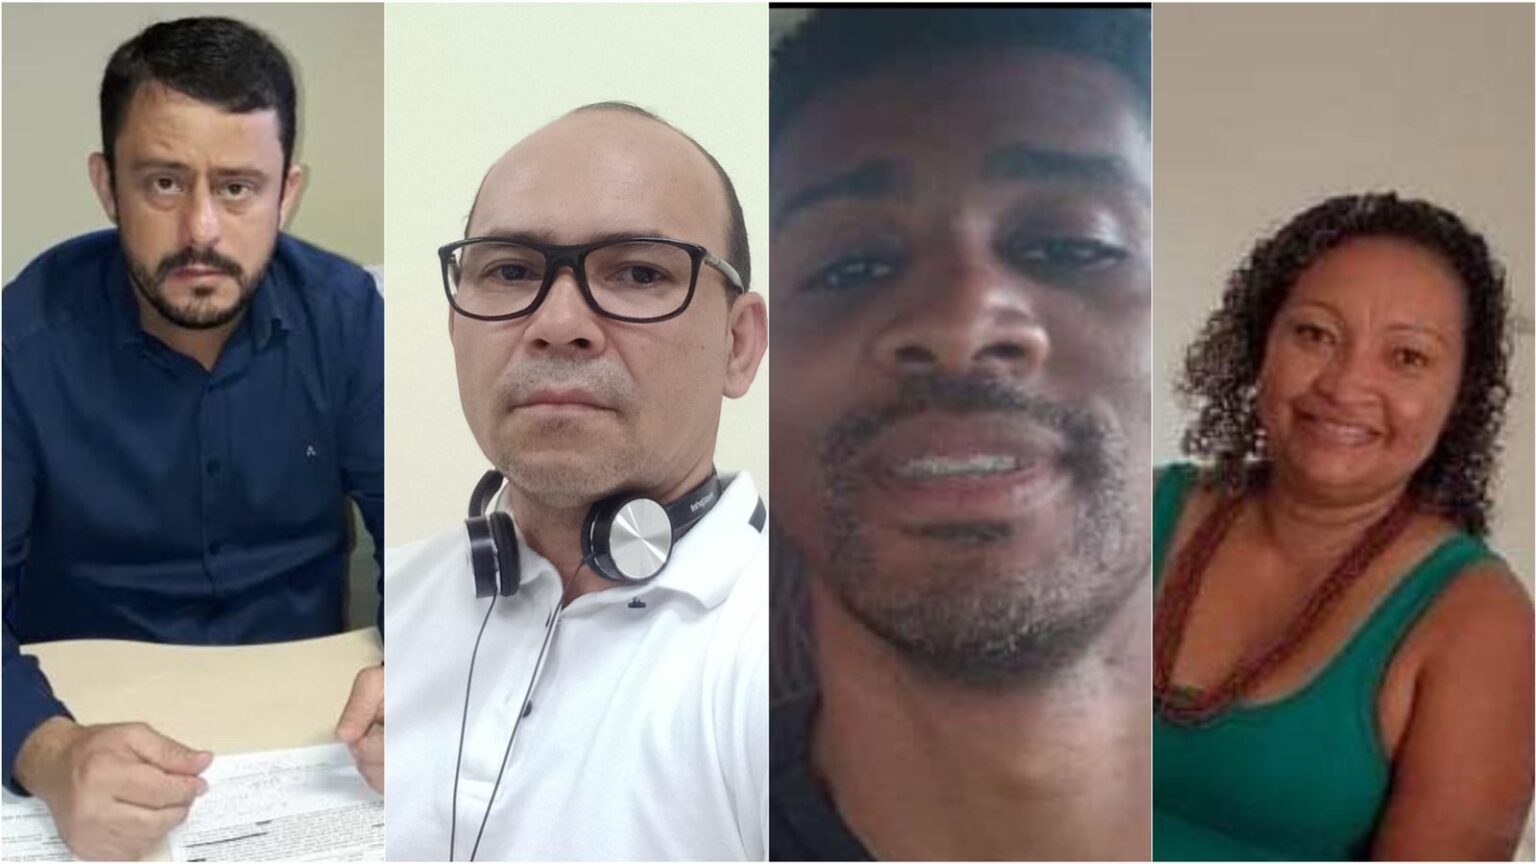 Mesa-redonda debate racismo estrutural no Brasil